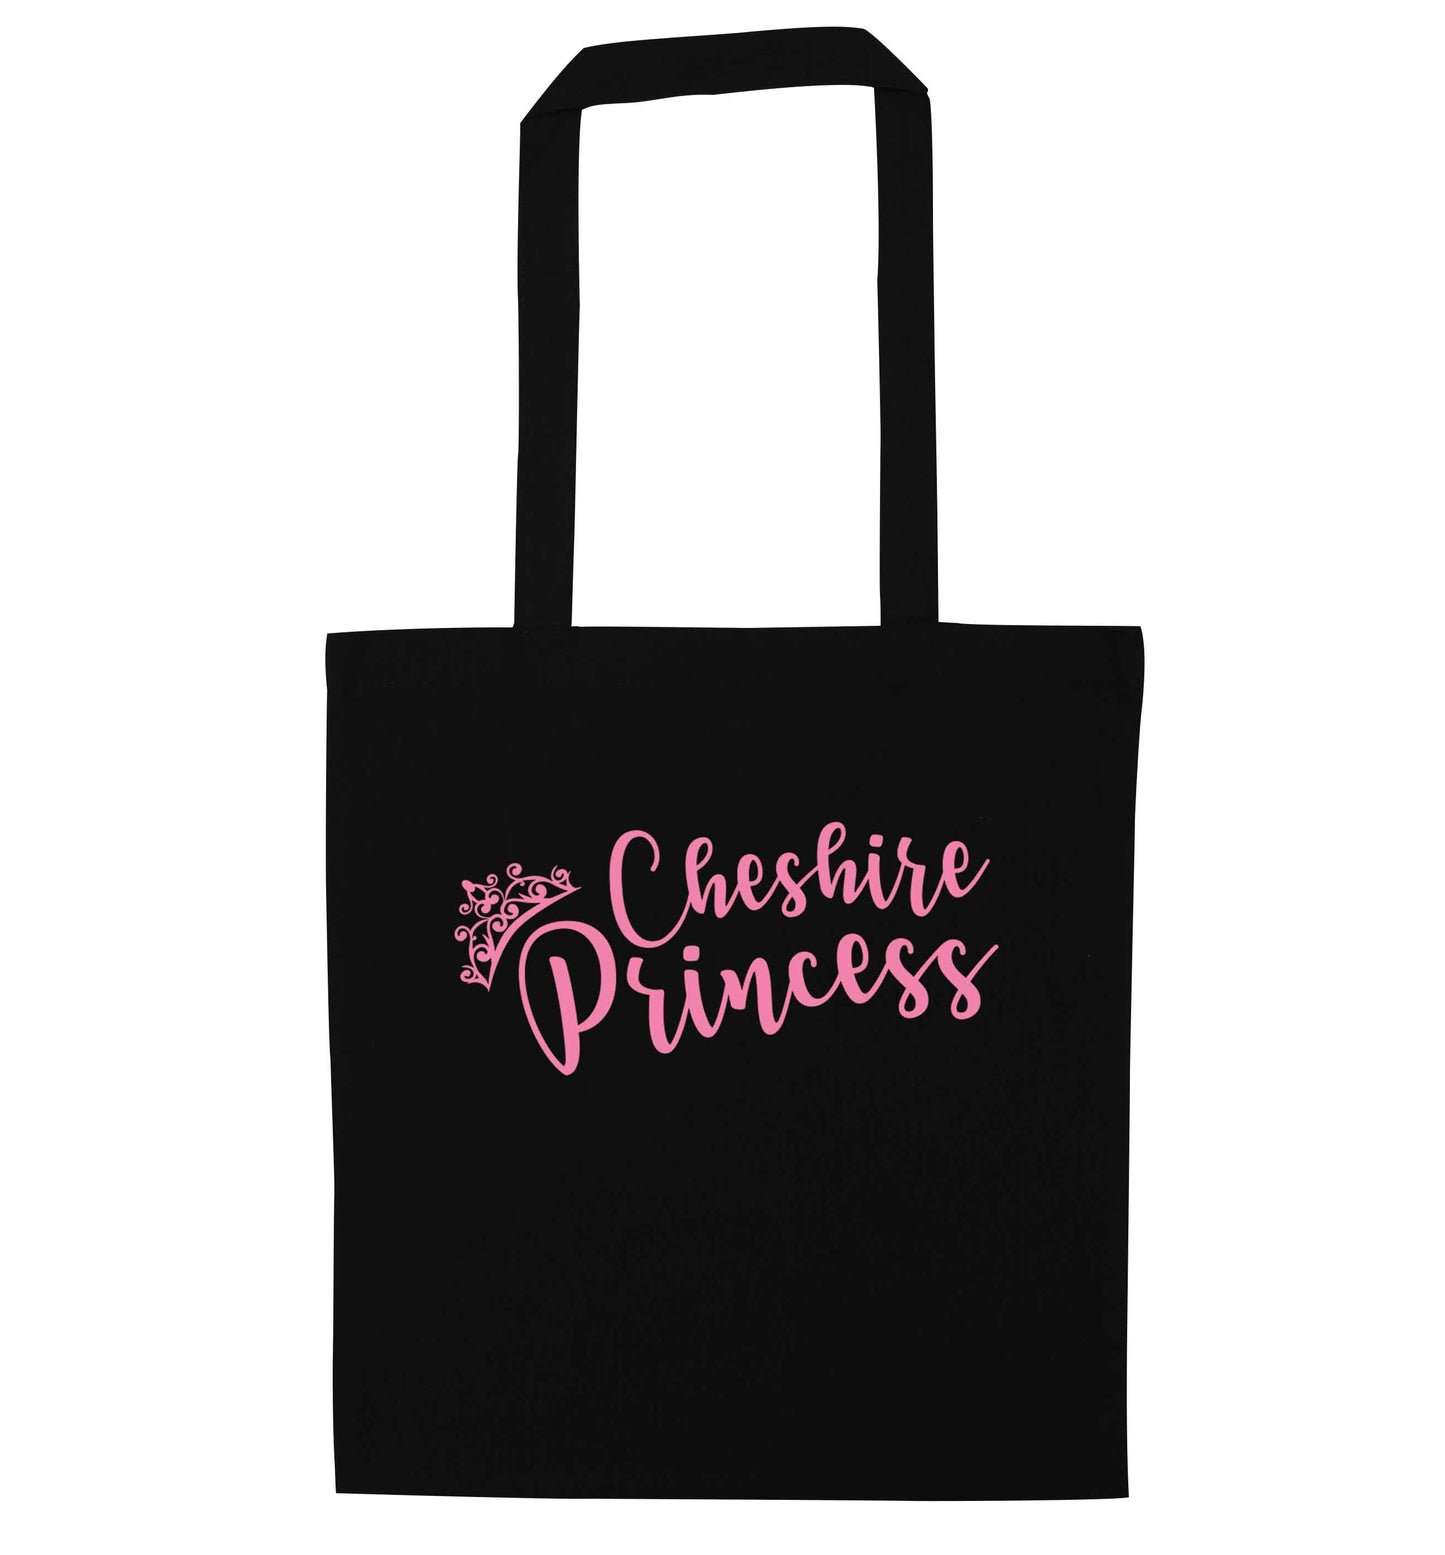 Cheshire princess black tote bag